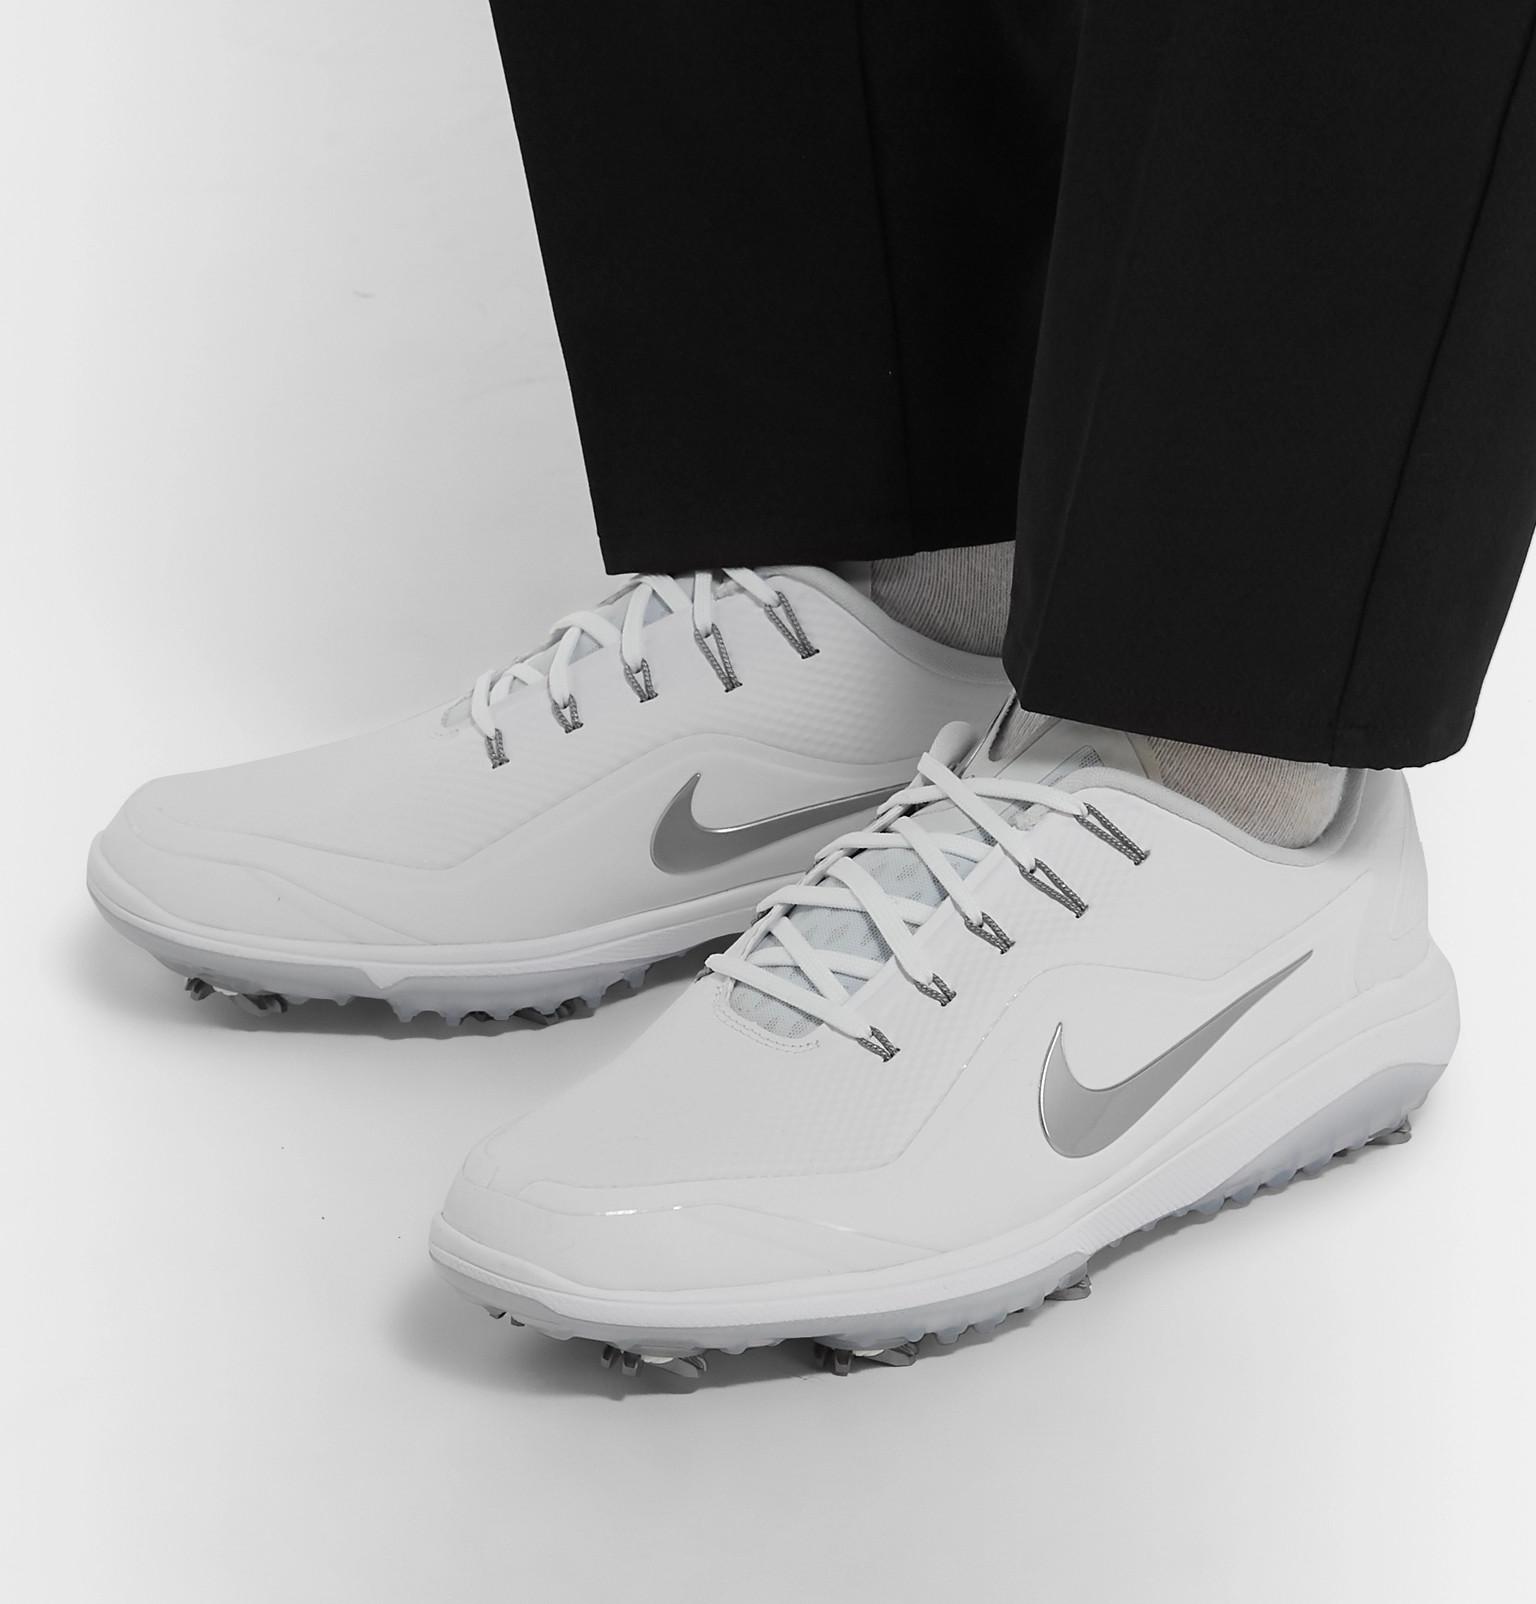 nike react vapor 2 golf shoes white